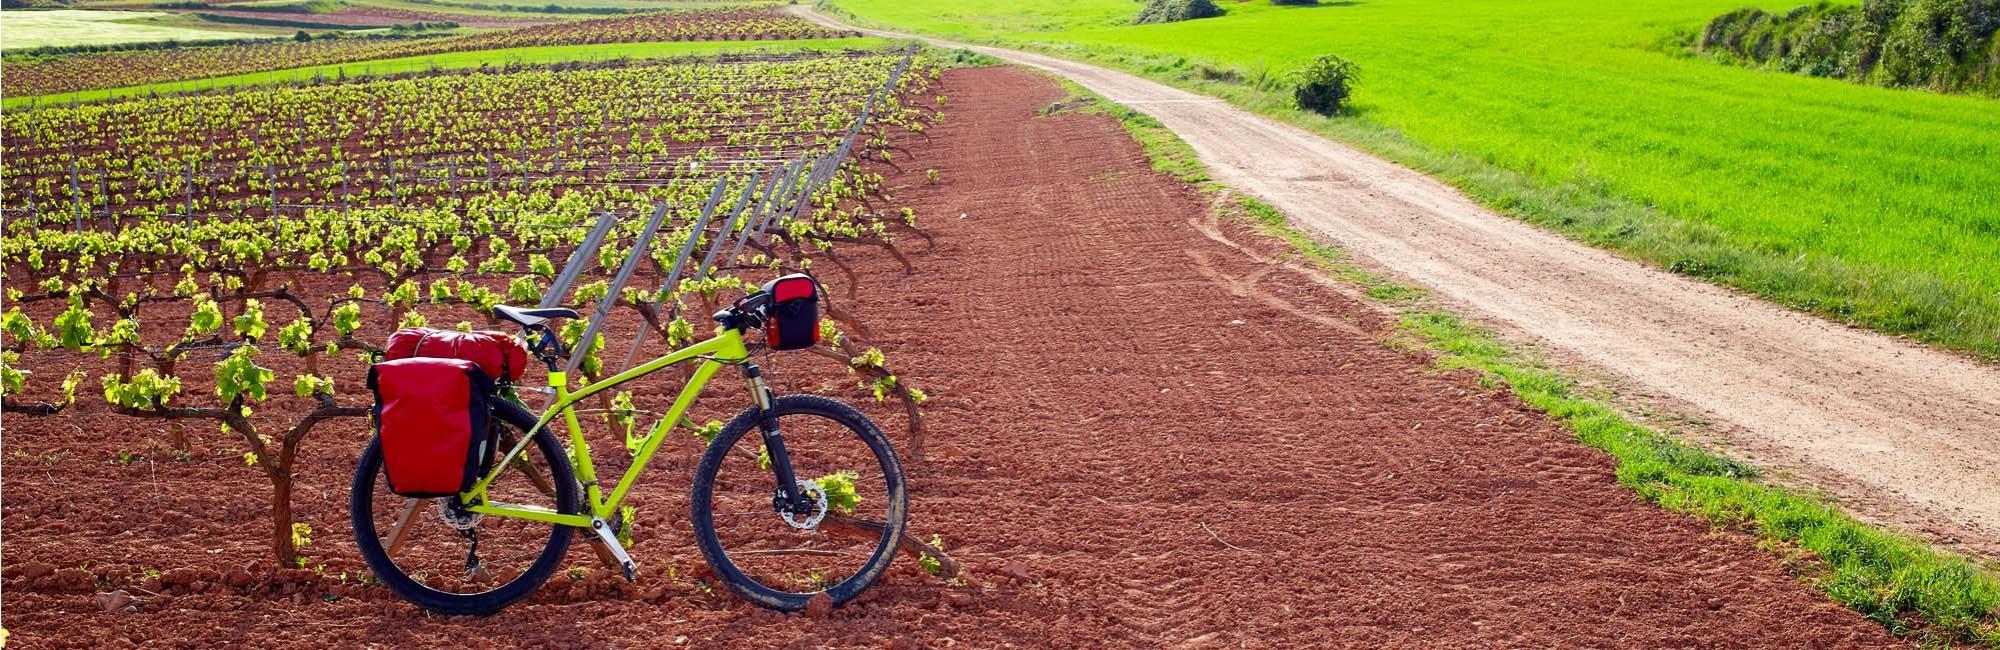 Bicycle among La Rioja vinyards